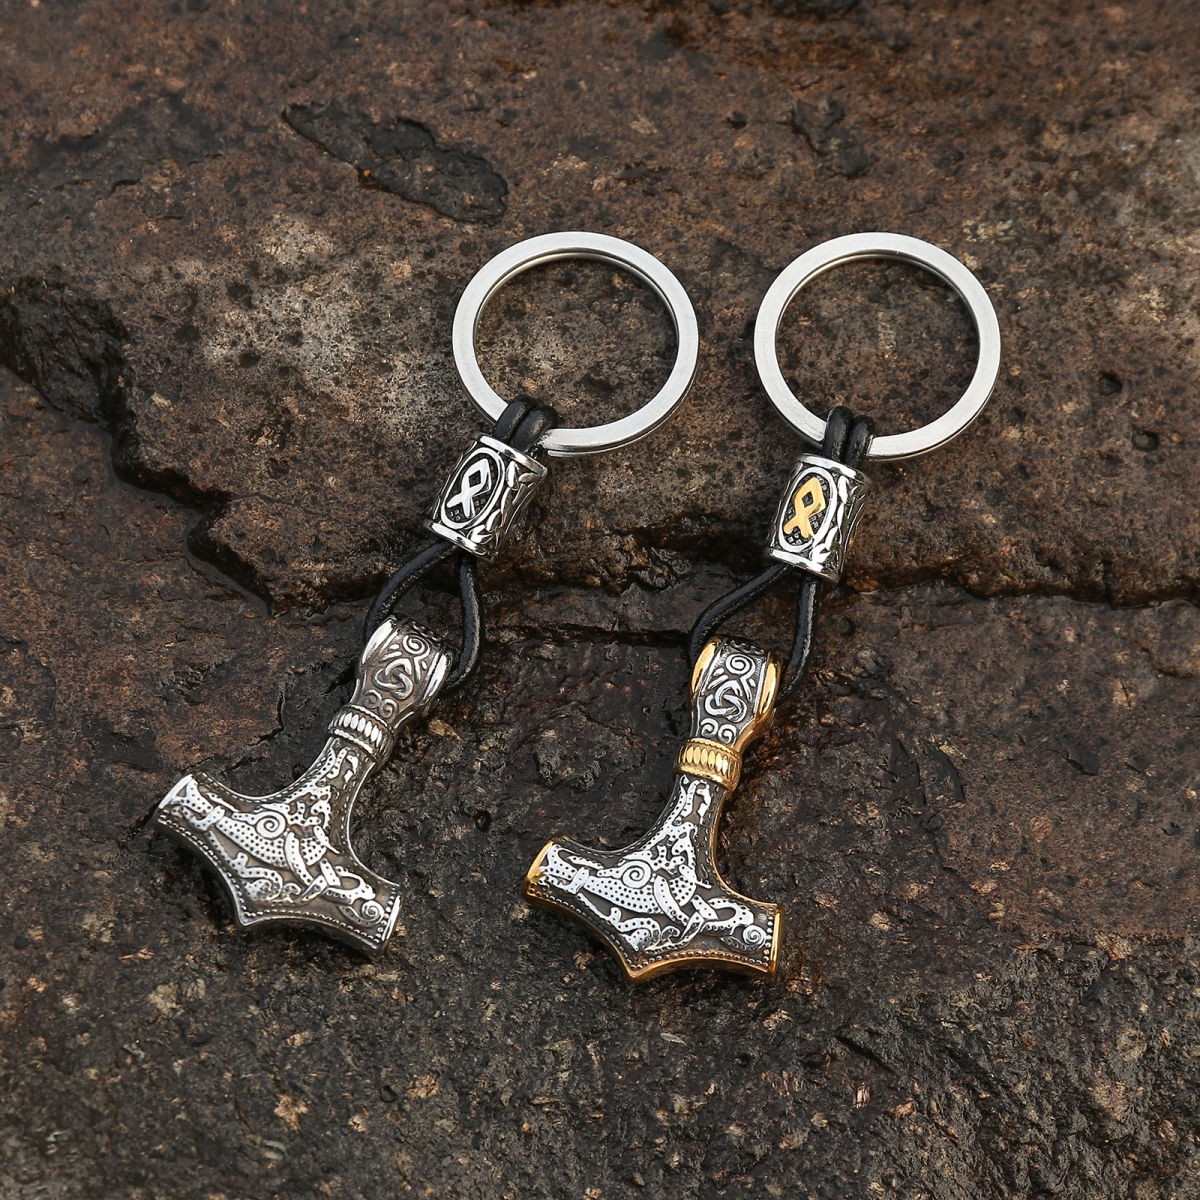 Mjolnir Keyring US$3.5/PC-NORSECOLLECTION- Viking Jewelry,Viking Necklace,Viking Bracelet,Viking Rings,Viking Mugs,Viking Accessories,Viking Crafts